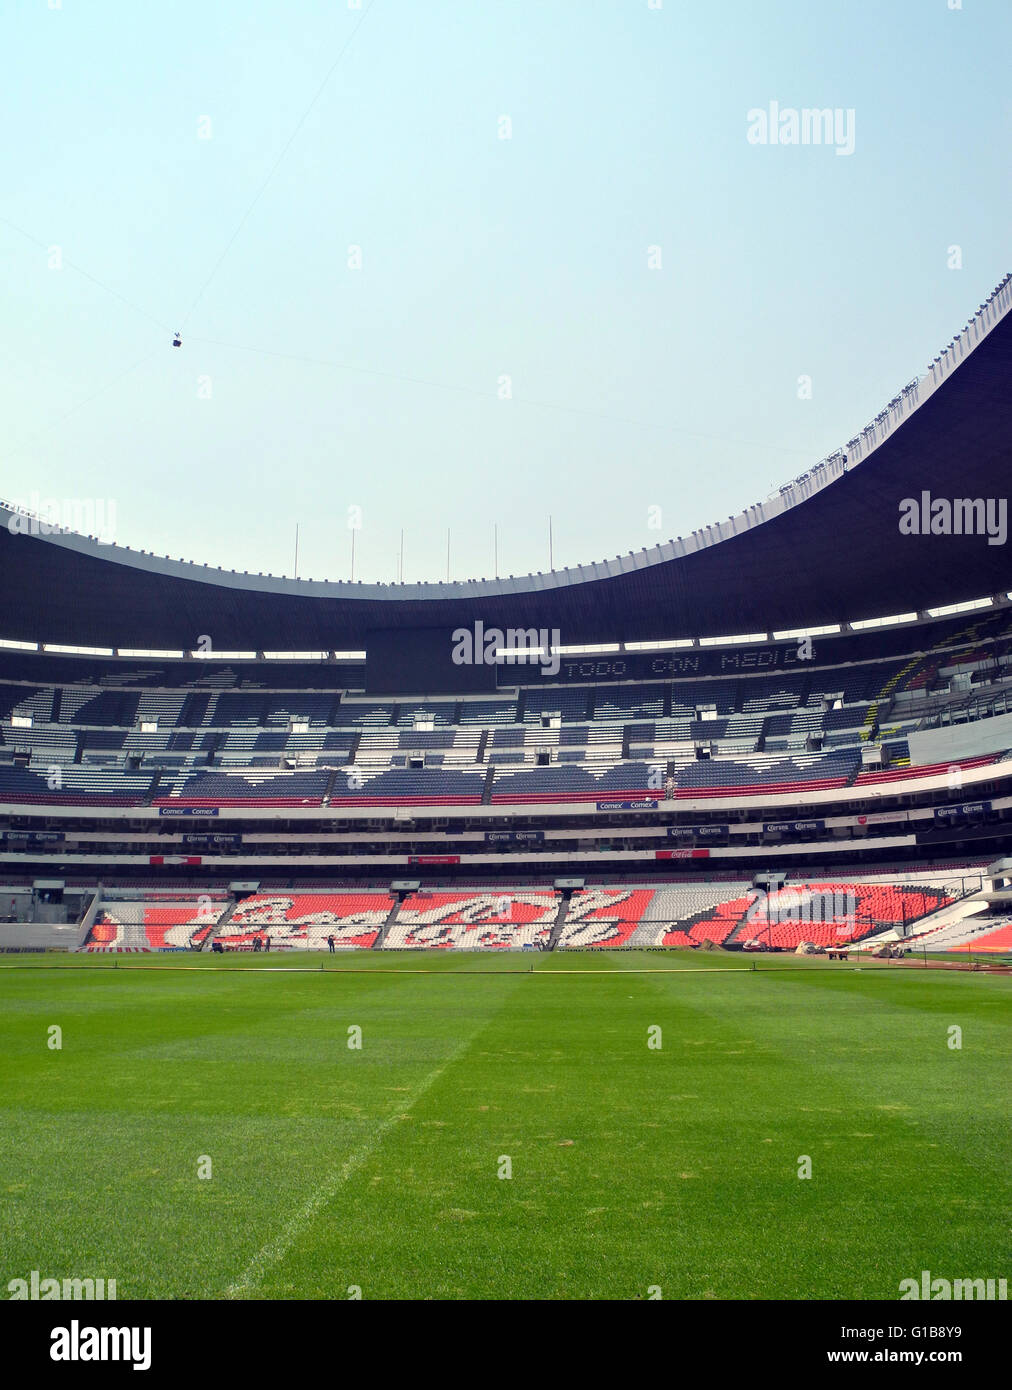 Azteca stadium hi-res stock photography and images - Alamy